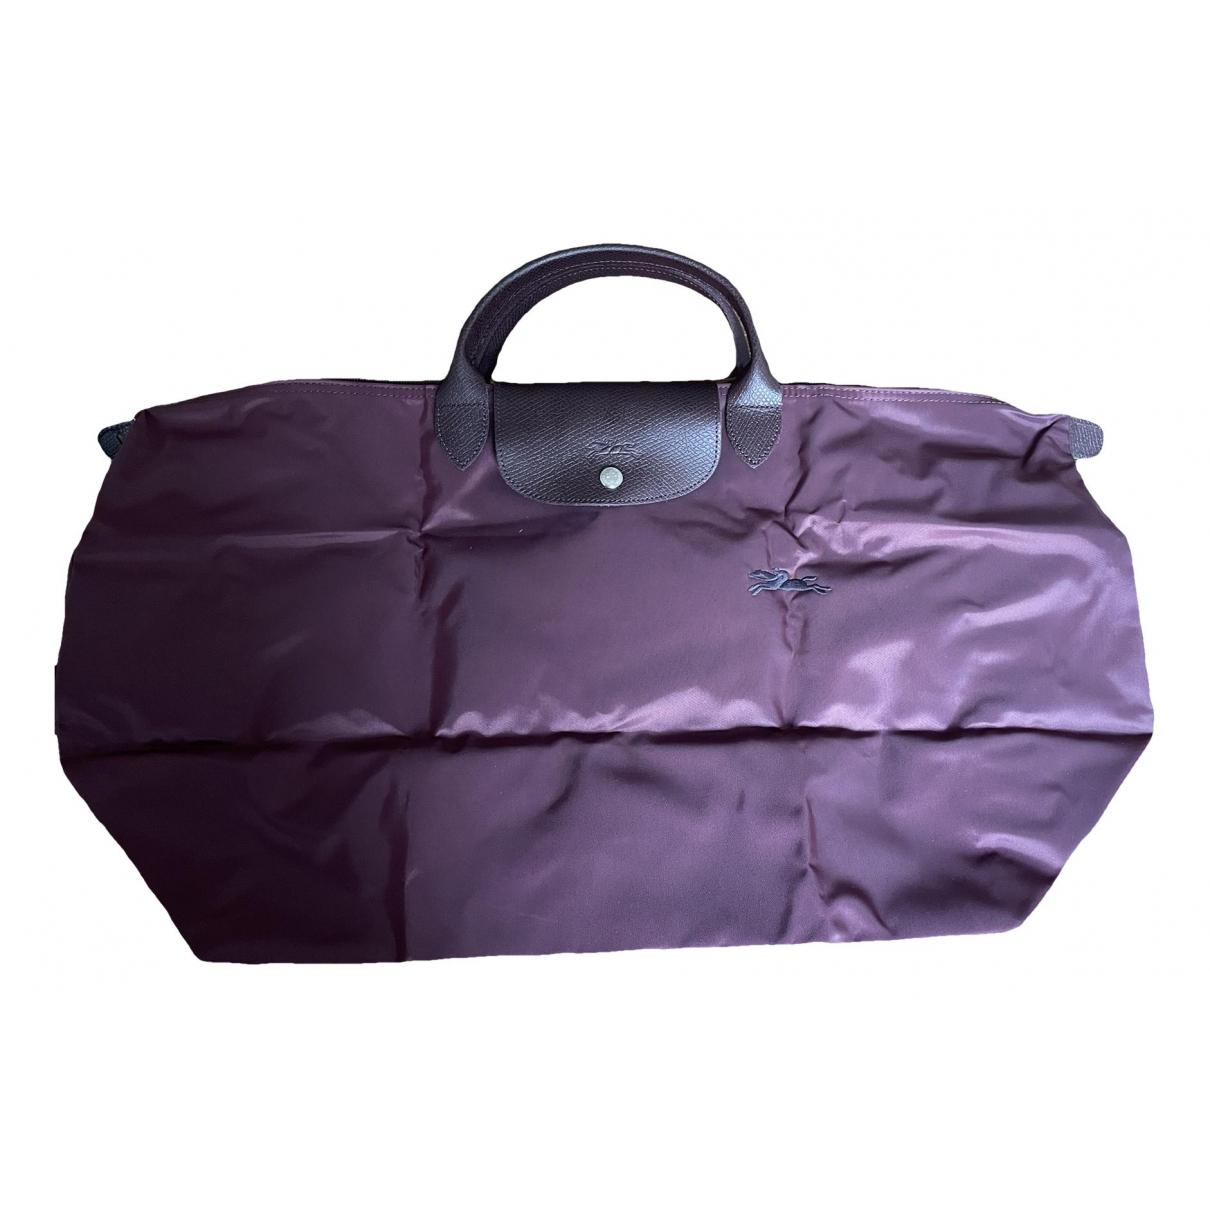 Longchamp Travel bags for Women - Vestiaire Collective